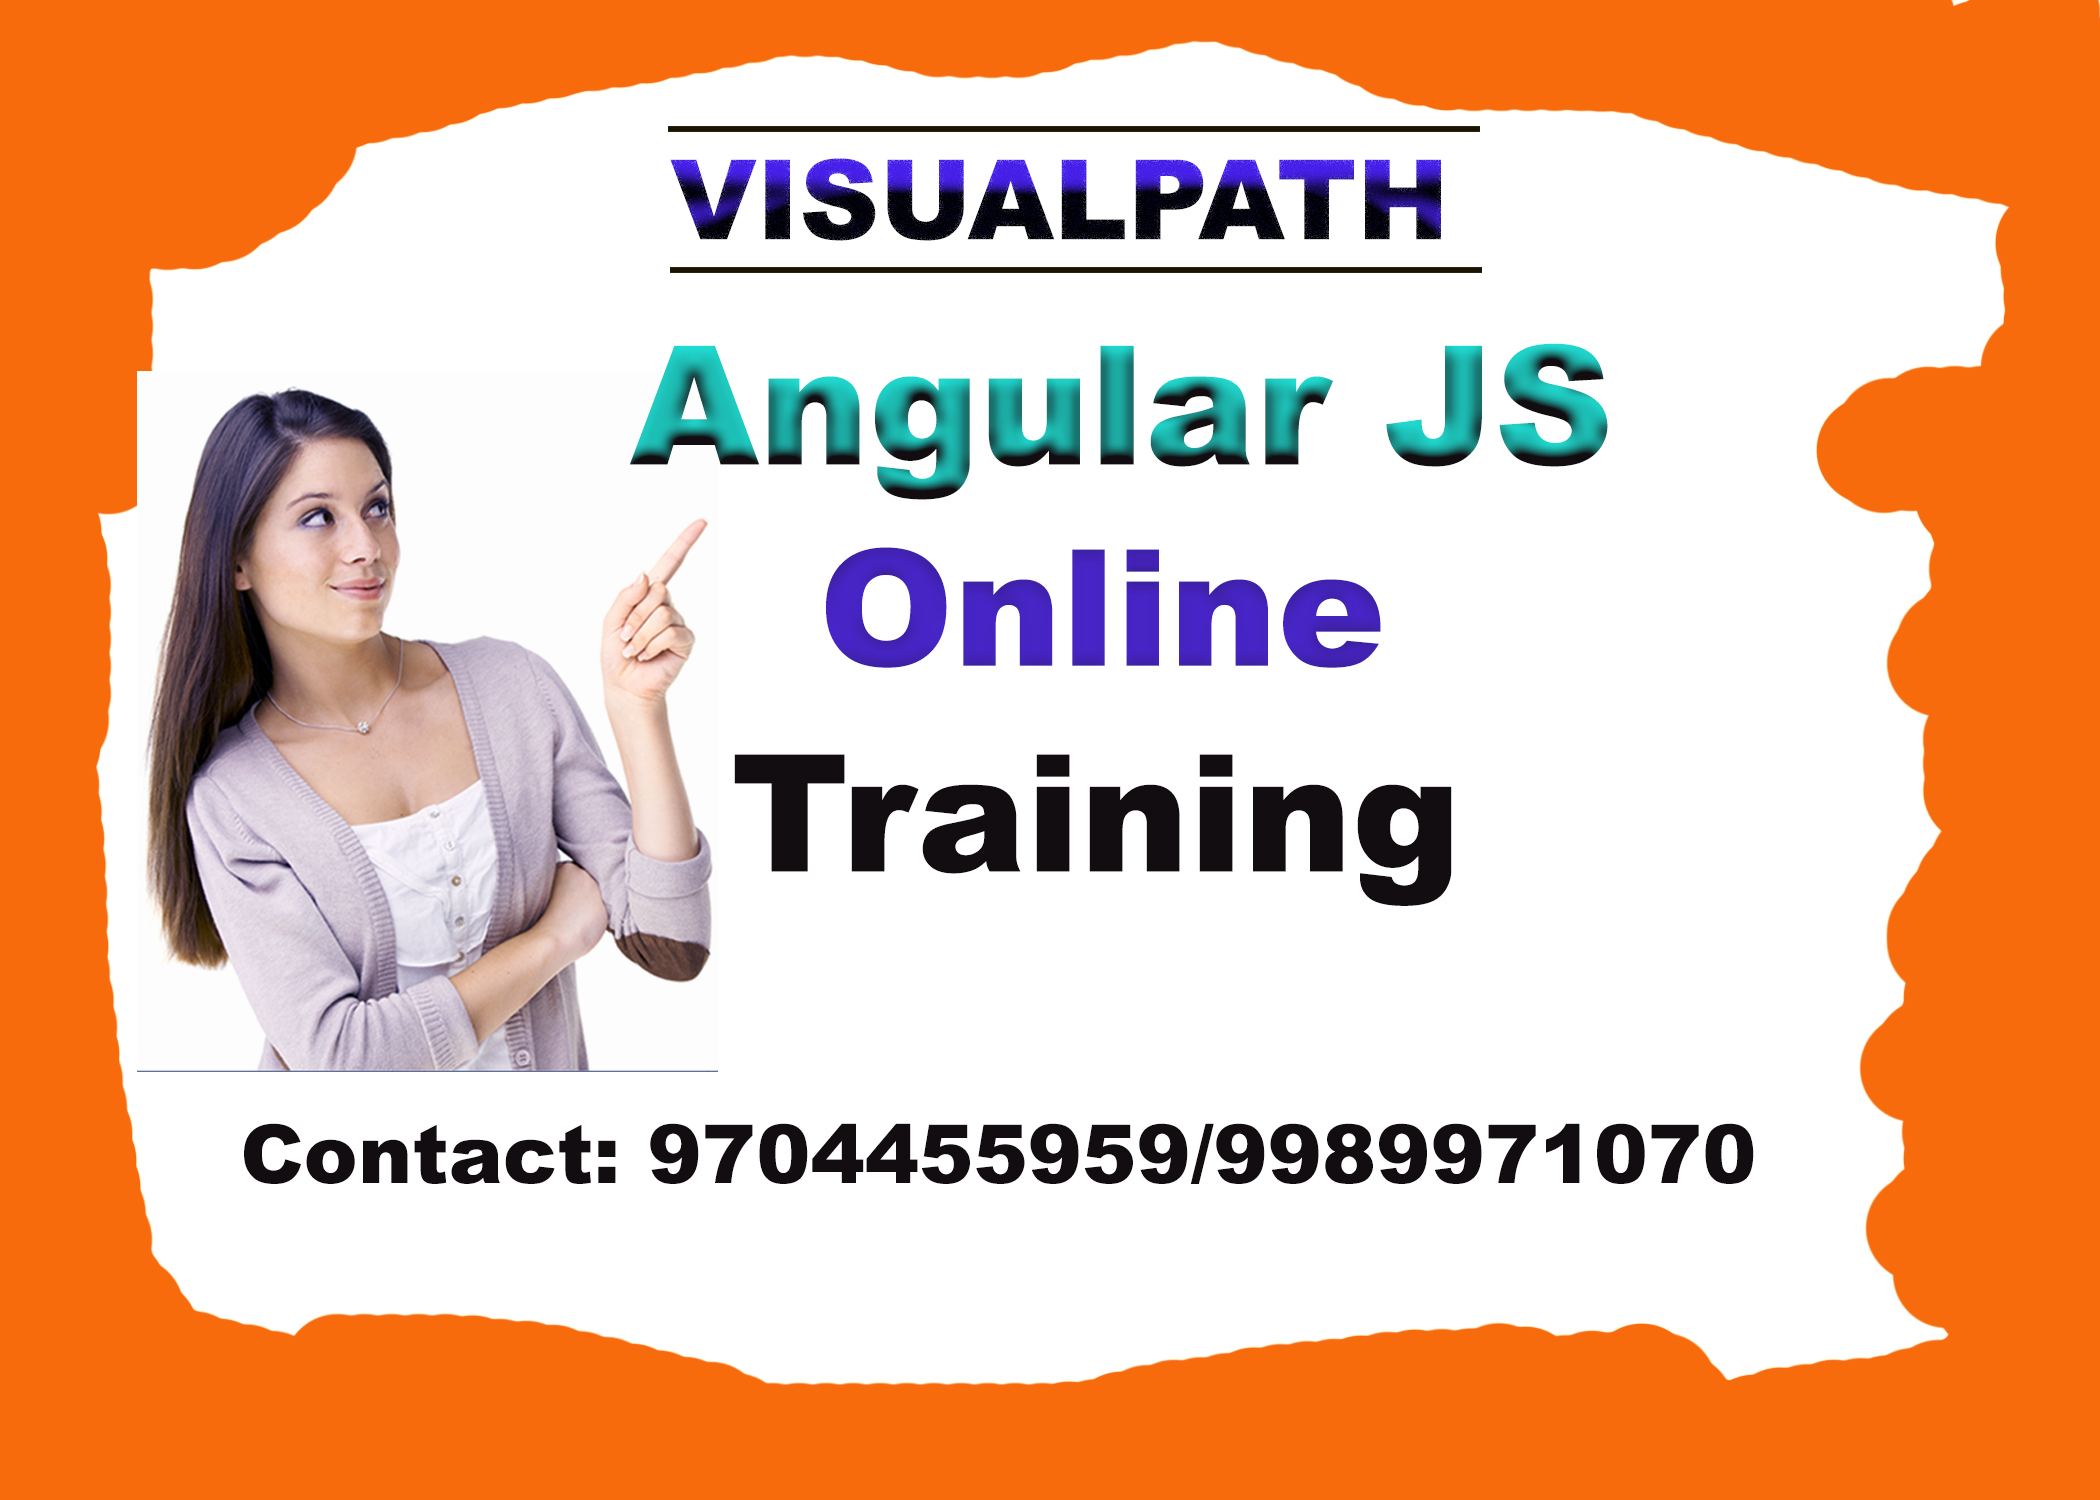 Angular JS Training Course in Hyderabad, Hyderabad, Telangana, India